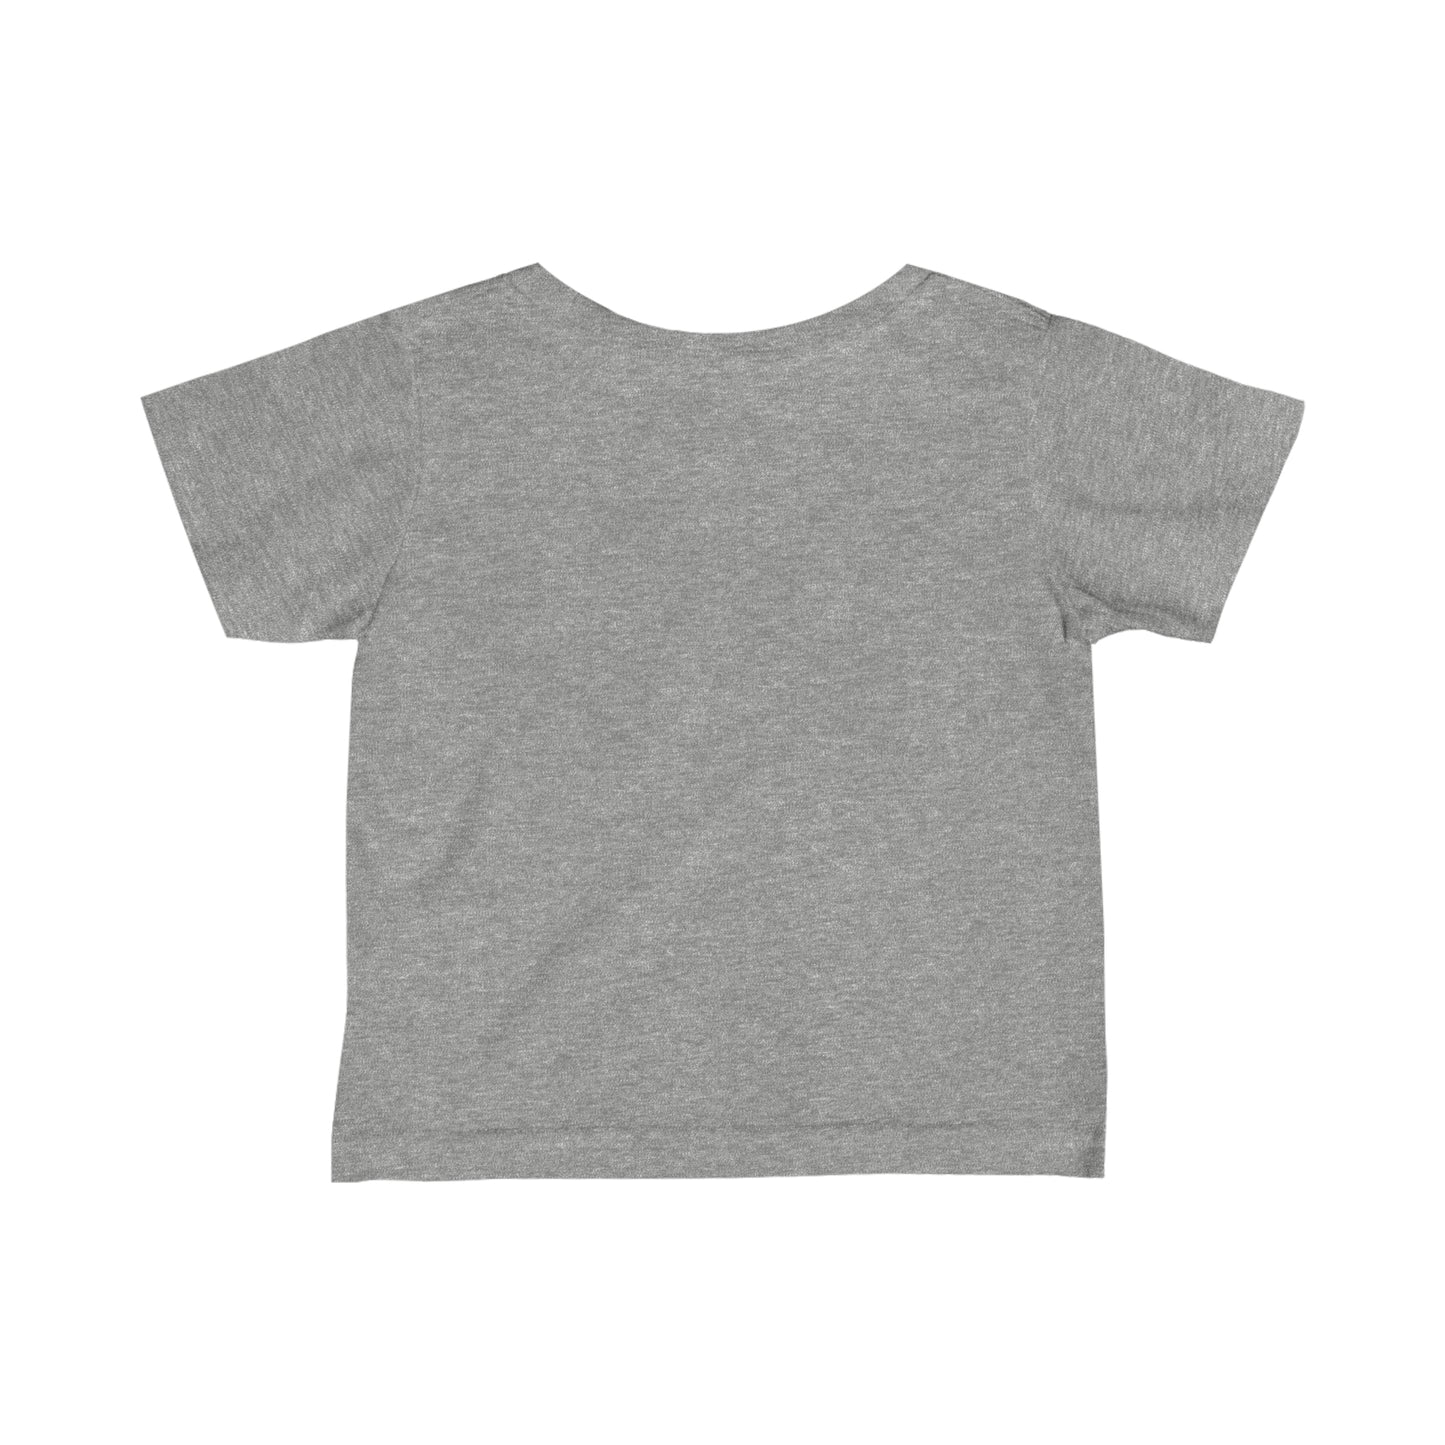 Unisex Printed Short Sleeve T-Shirt for 6m-24m